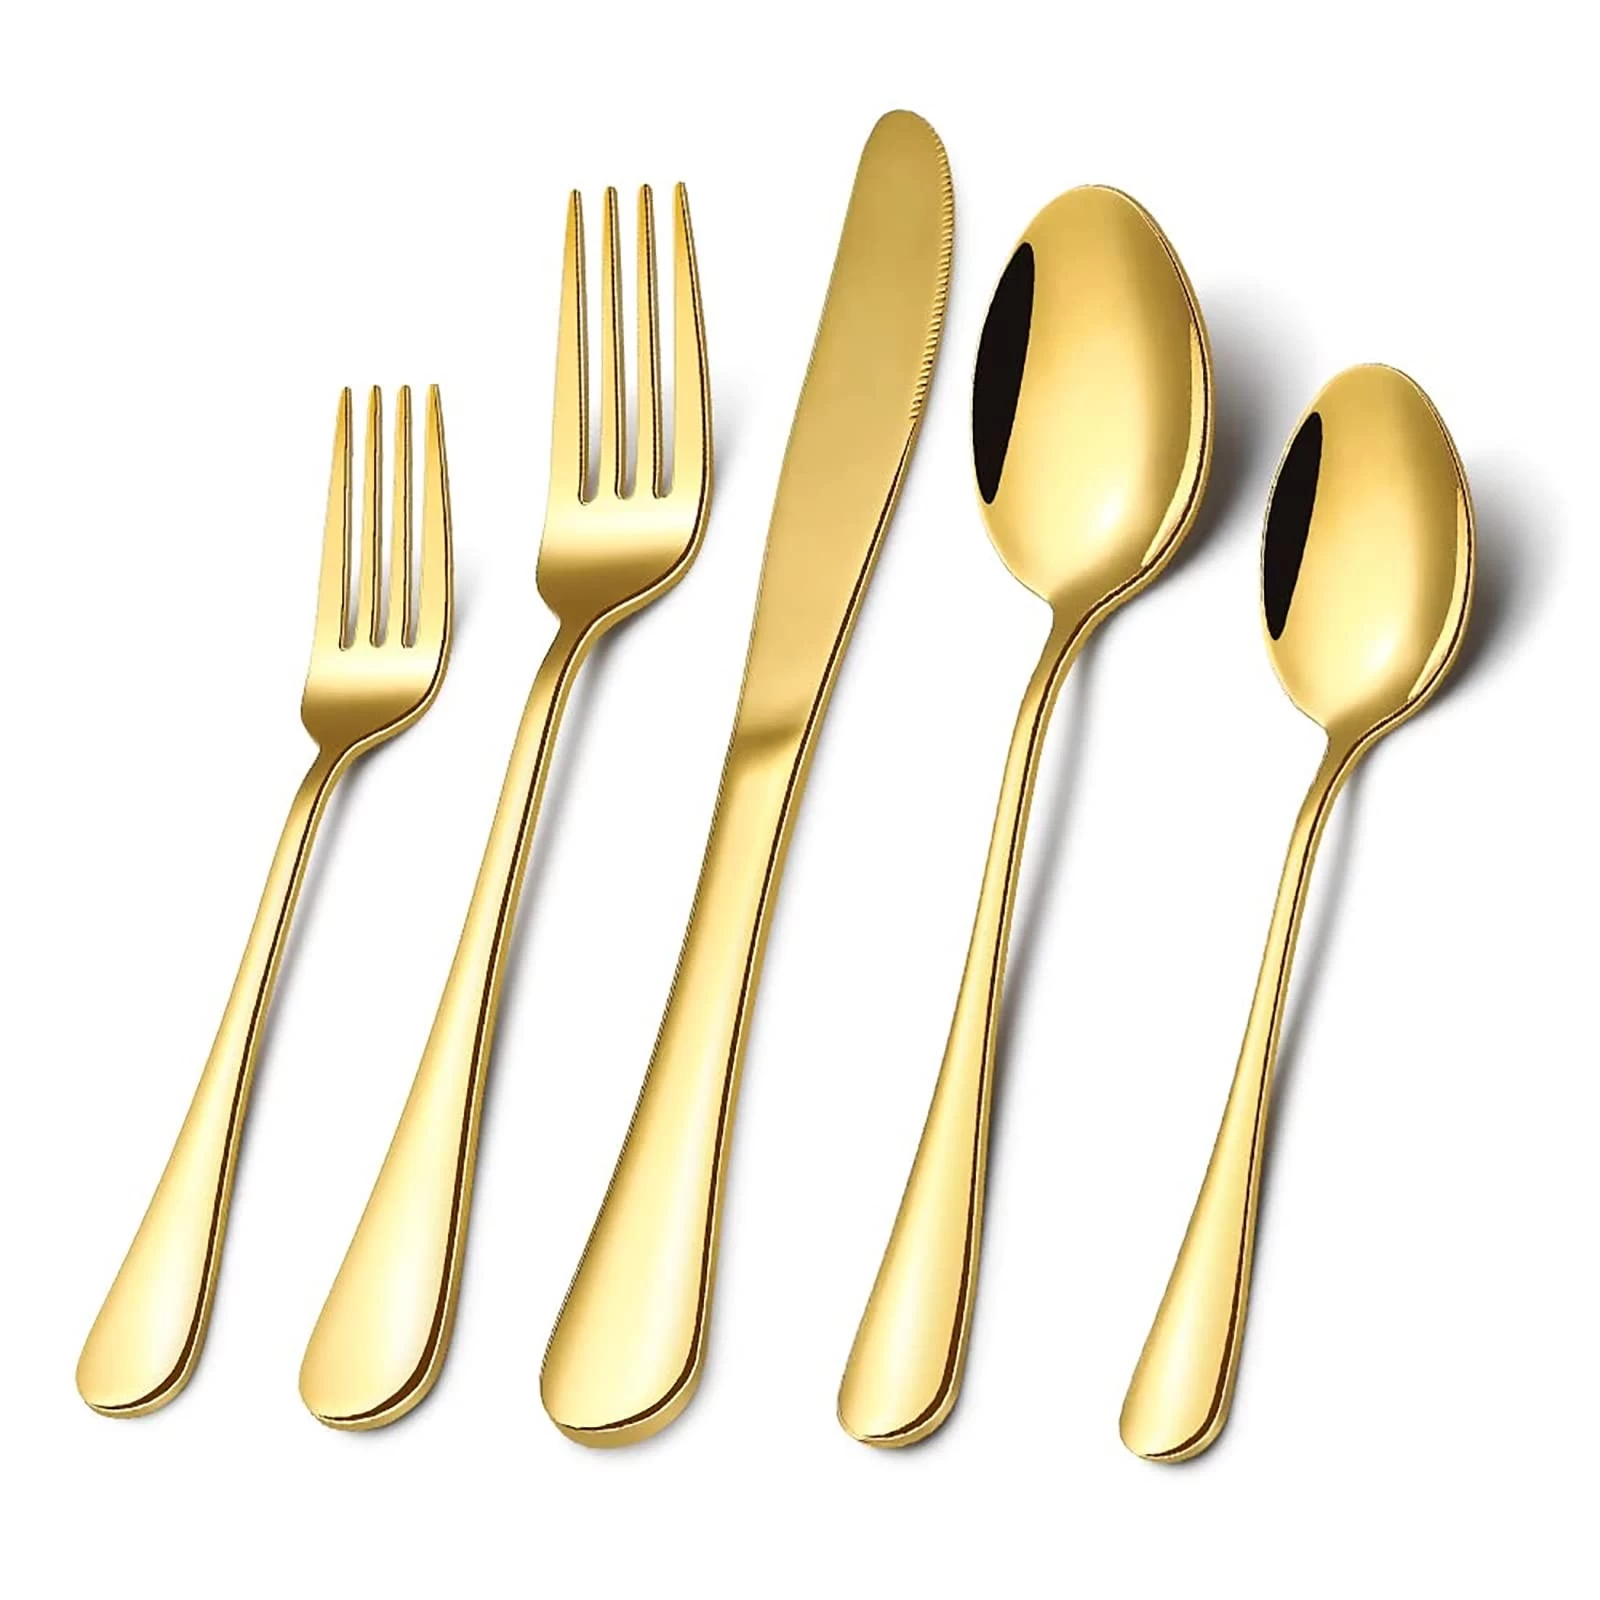 China stainless steel kitchenwares cutlery set Manufacturer